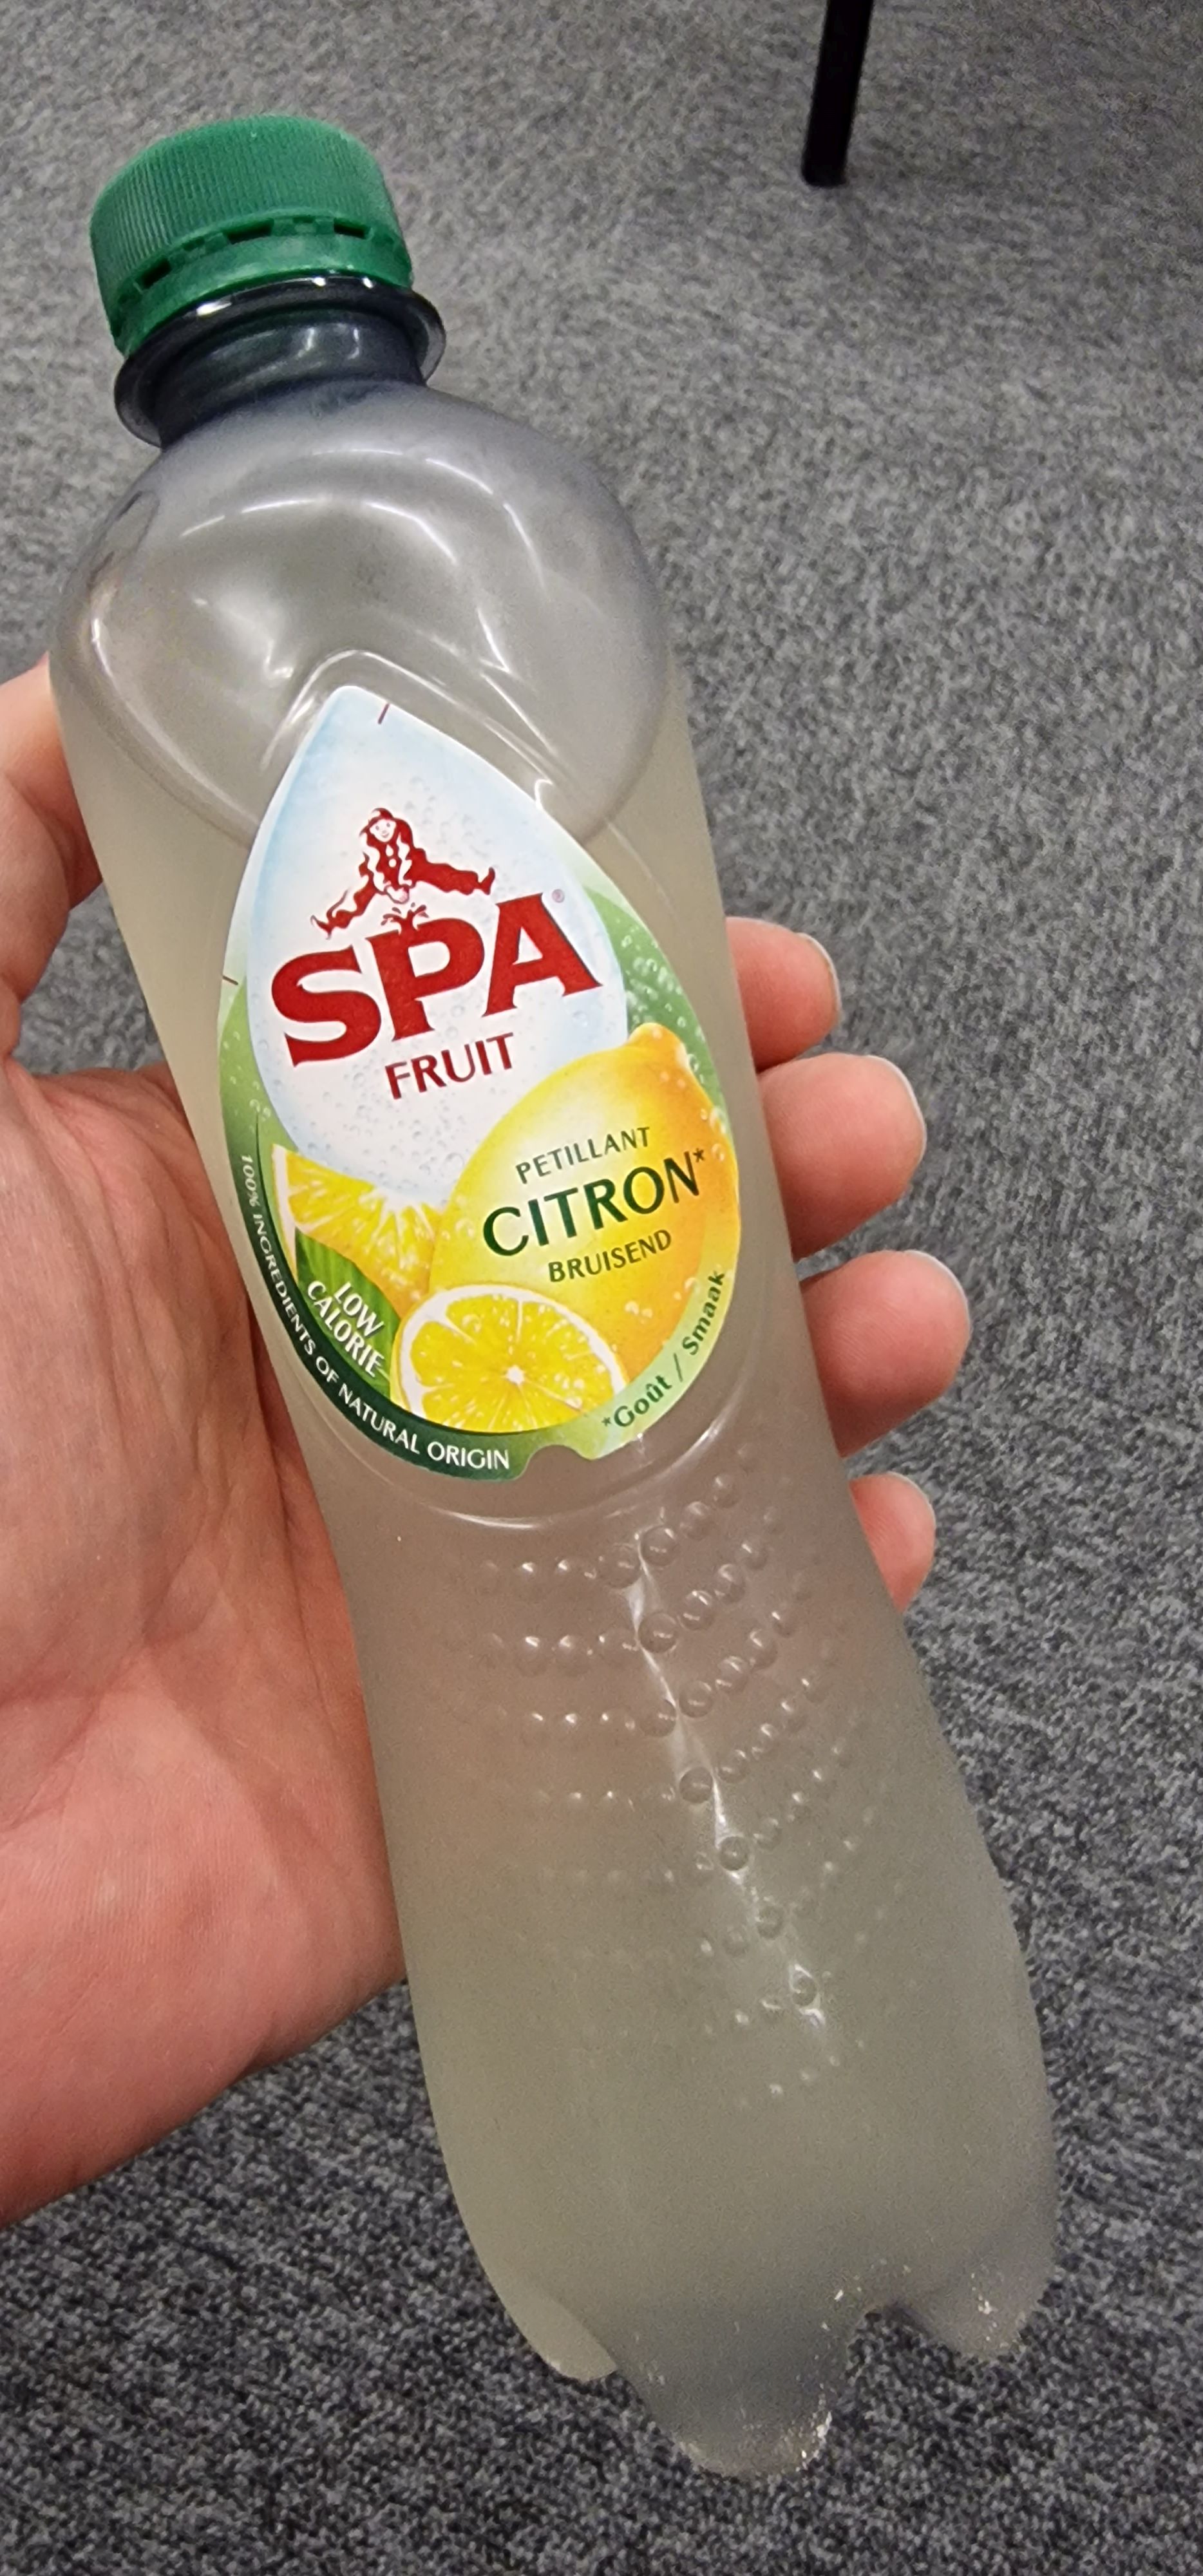 SPA fruit – Petillant Citron Bruisend